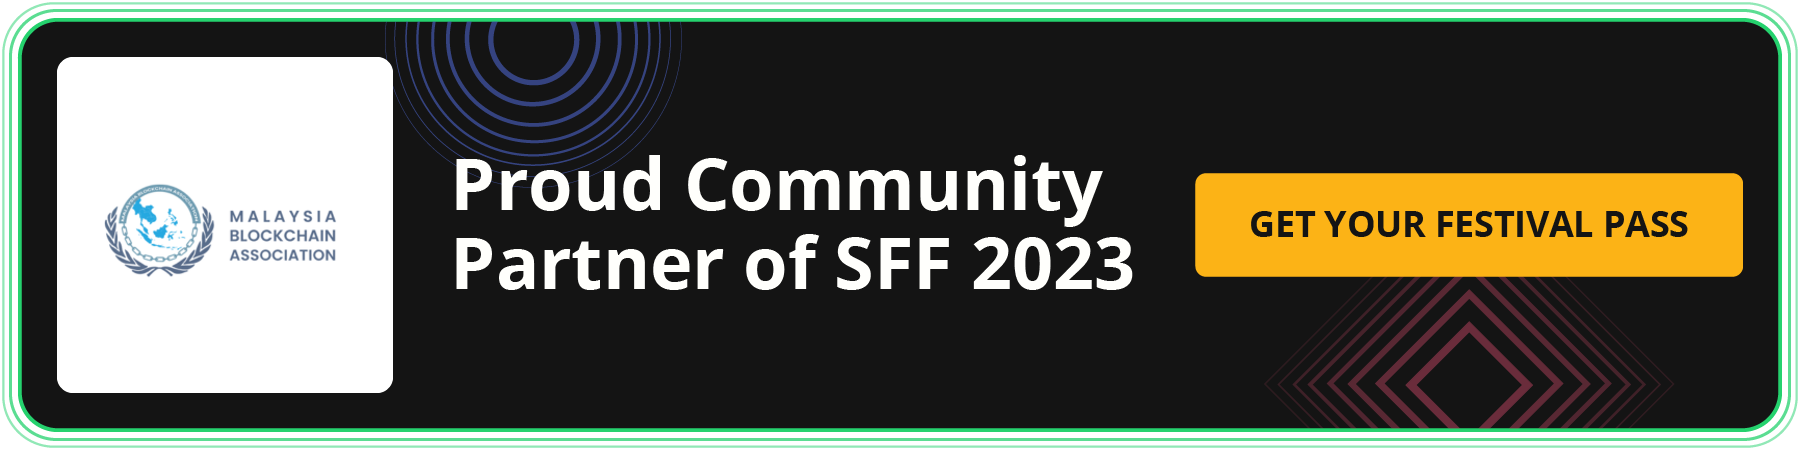 SFF 2023 Proud Community Partner